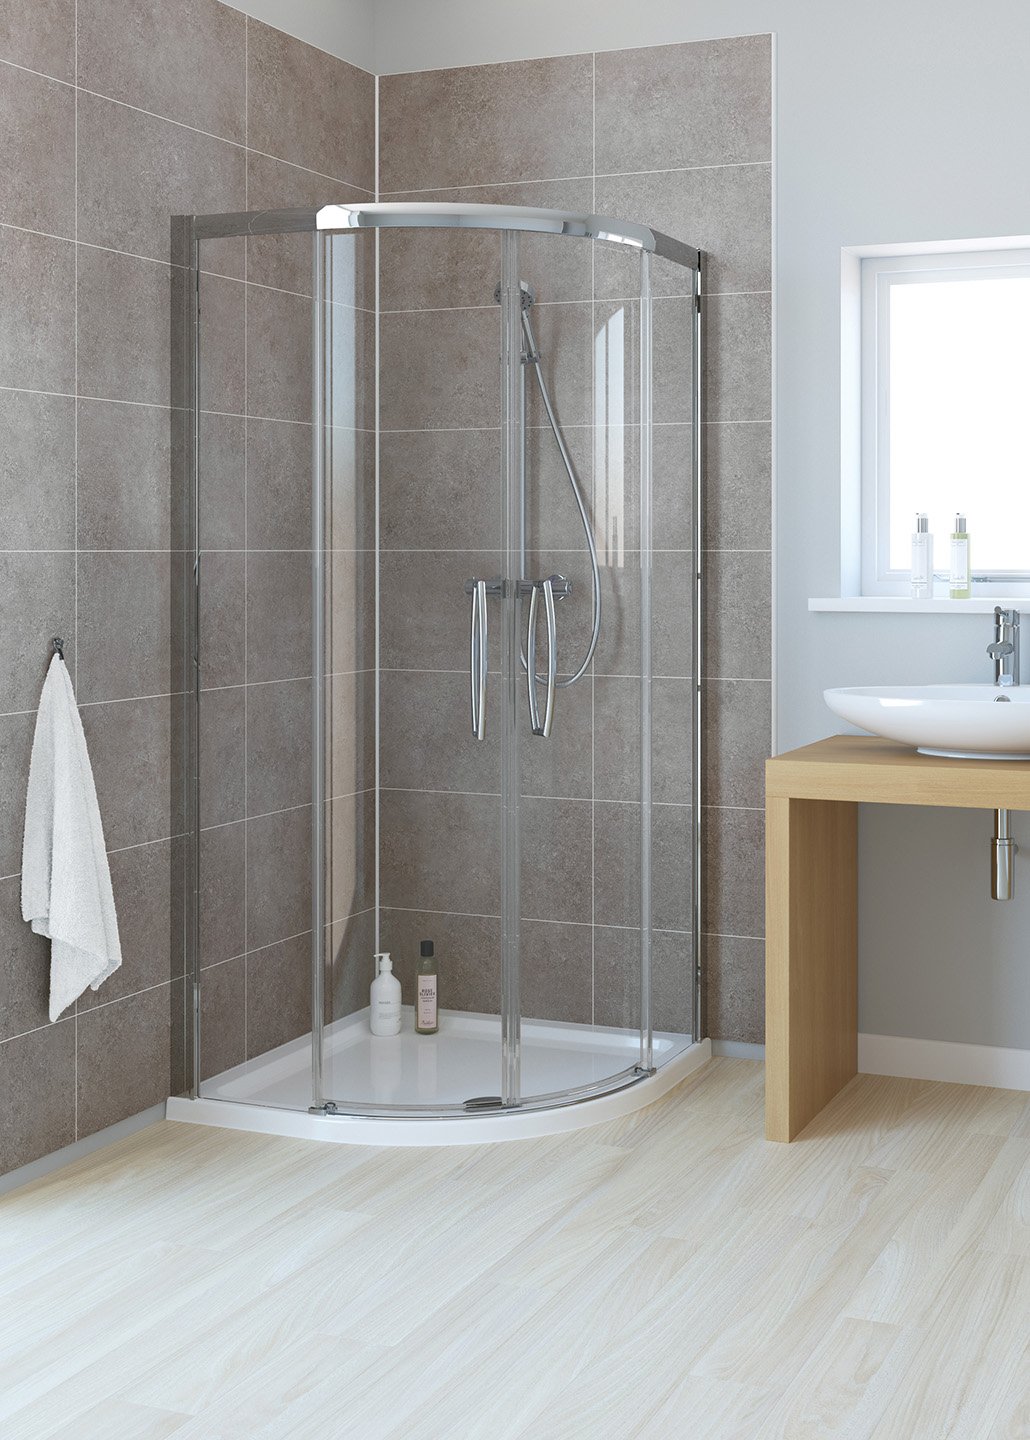 Lakes Low Threshold Double Door Quadrant Shower Enclosure | Bathroom ...